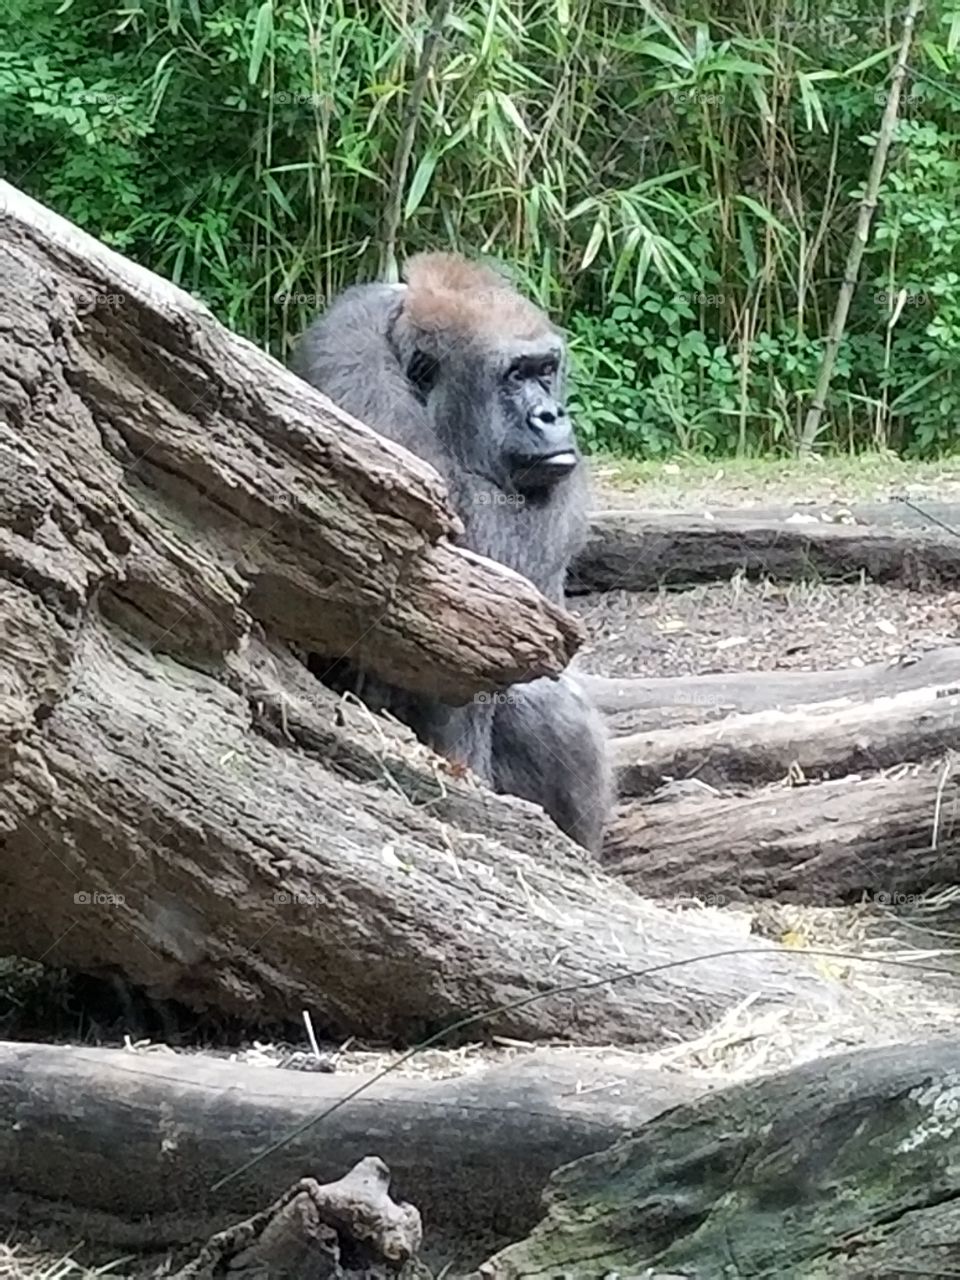 Bronx zoo love the gorillas!!!